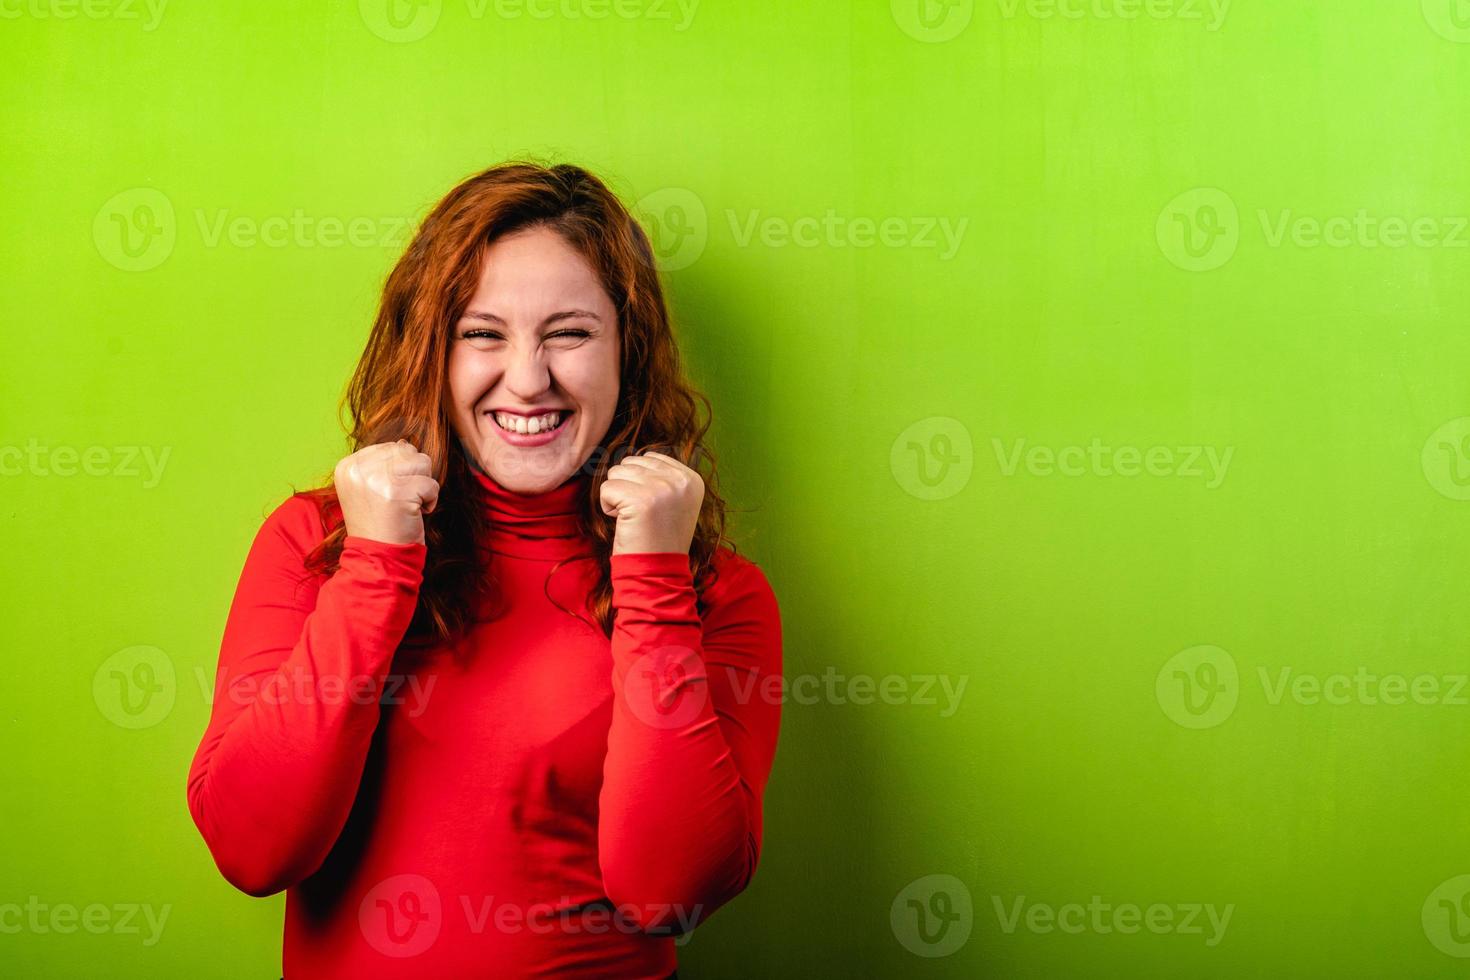 expressieve gelukkige roodharige vrouw op groene achtergrond en kopieer ruimte foto